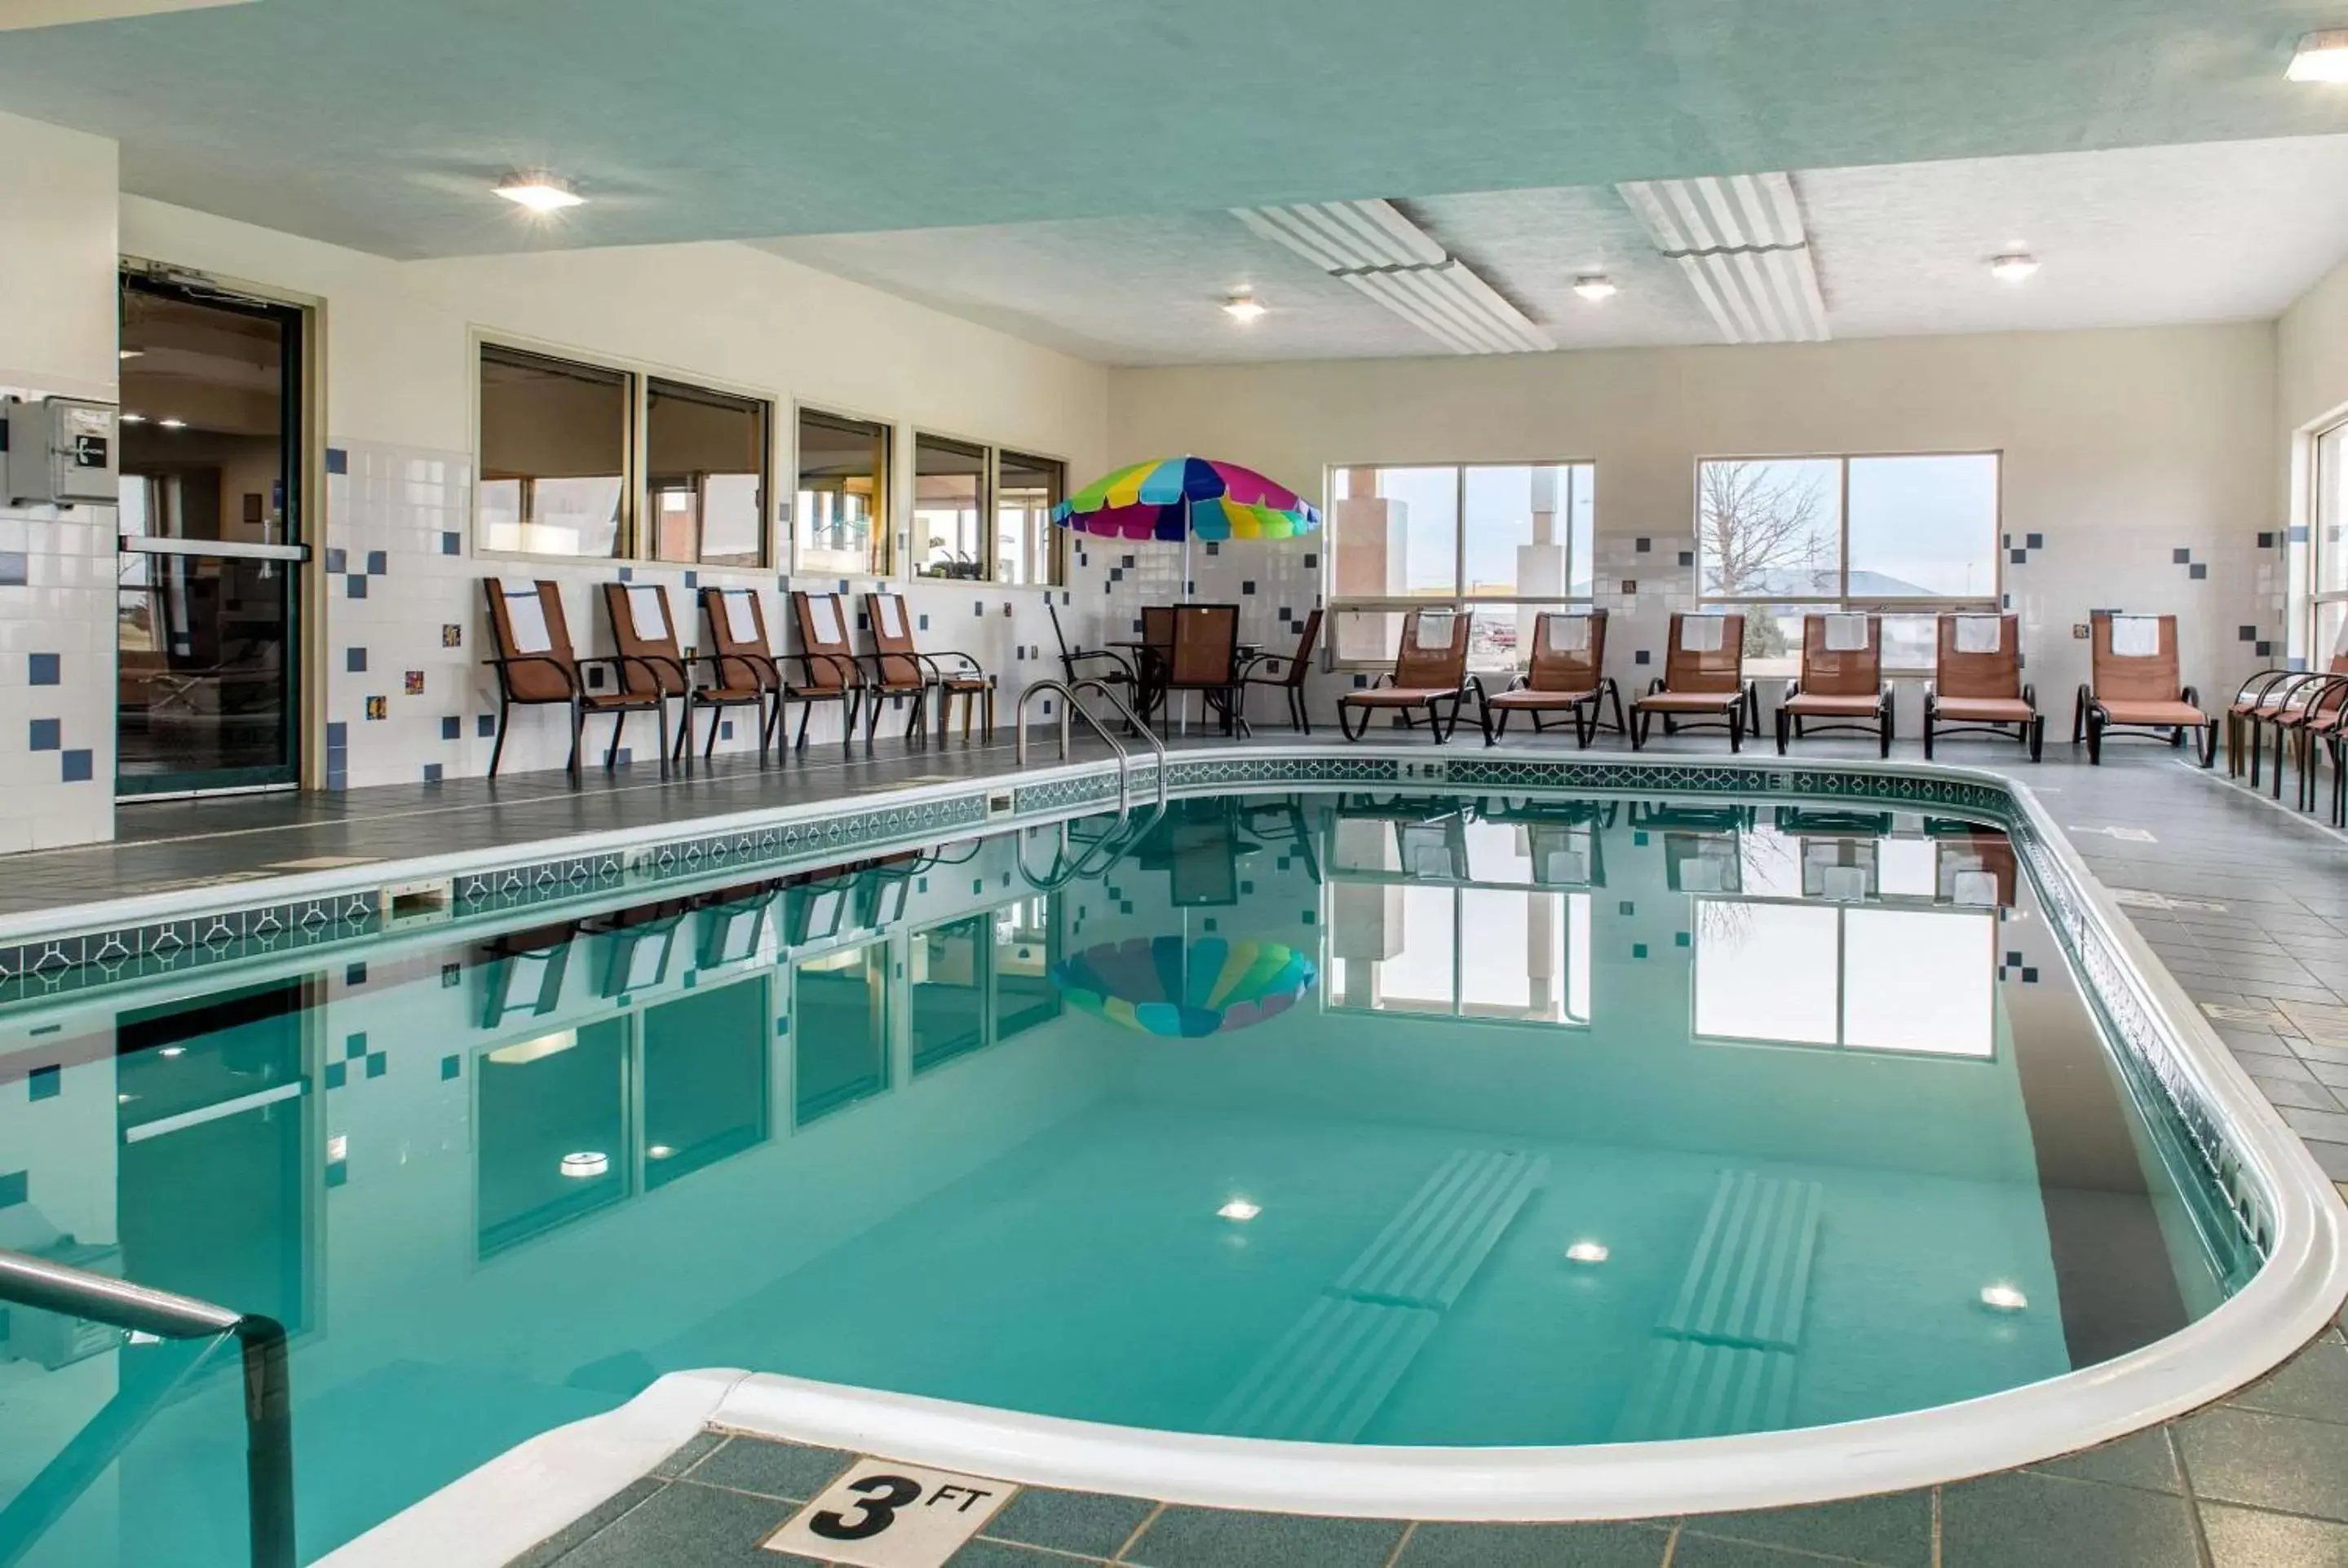 Activities, Swimming Pool in Quality Inn Jacksonville near I-72